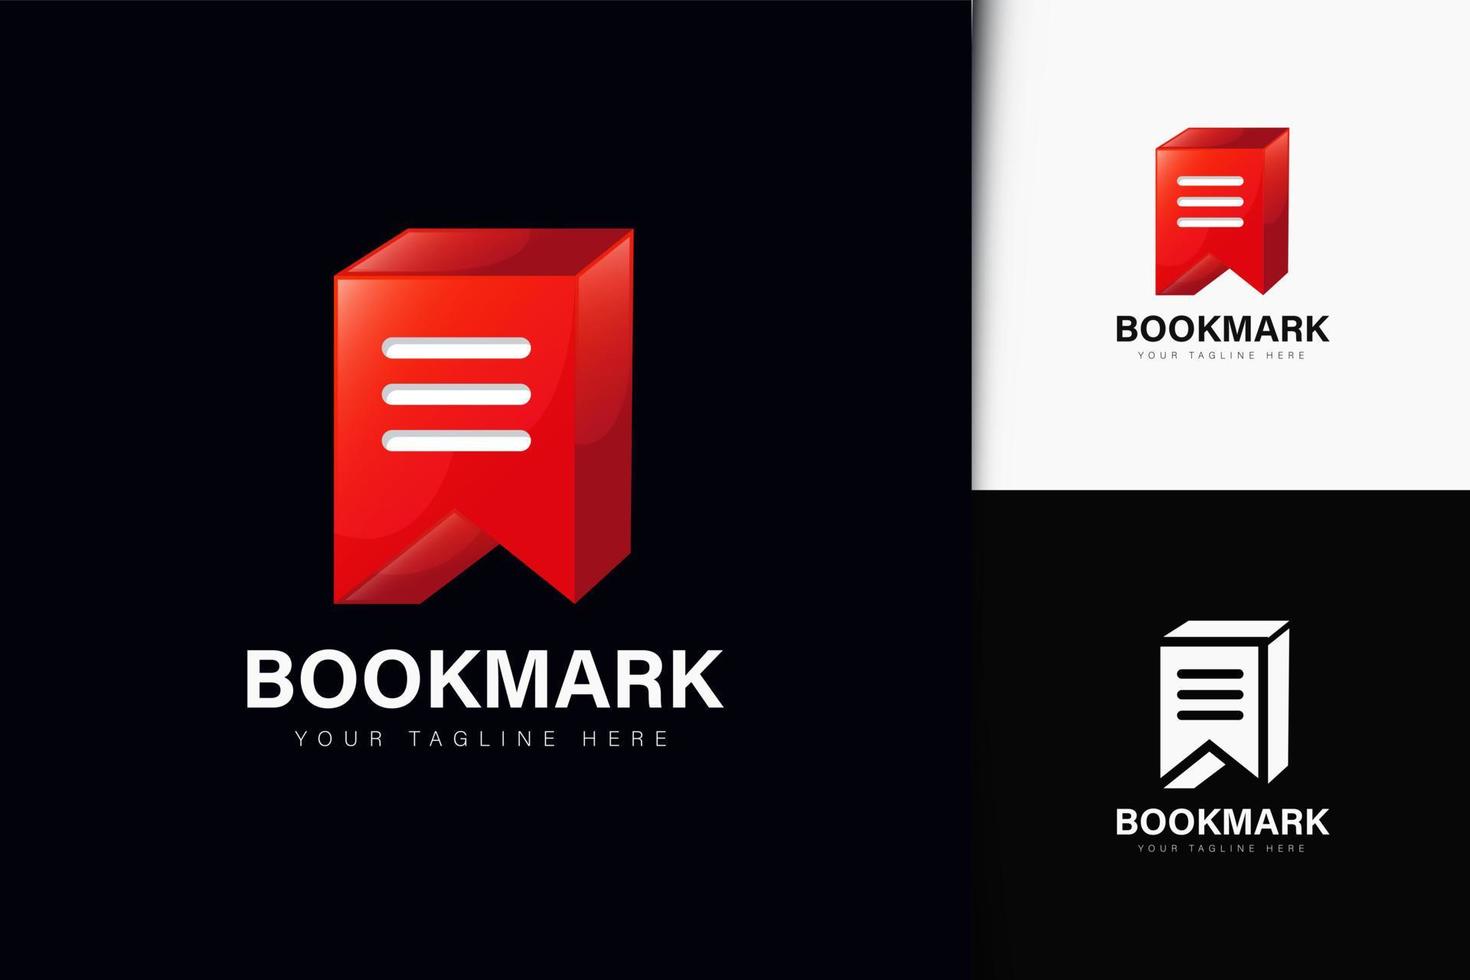 Bookmark note logo design with gradient vector